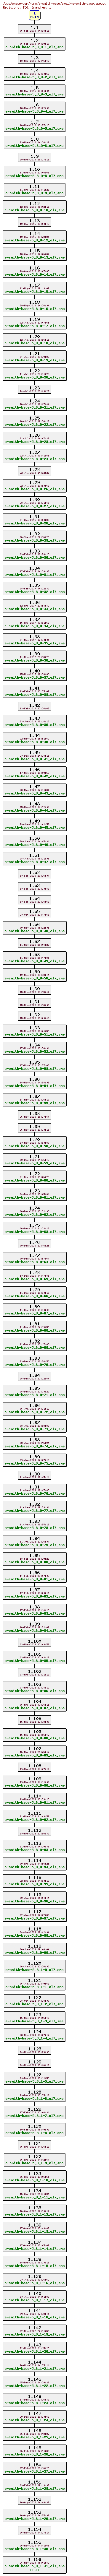 Revisions of rpms/e-smith-base/sme10/e-smith-base.spec